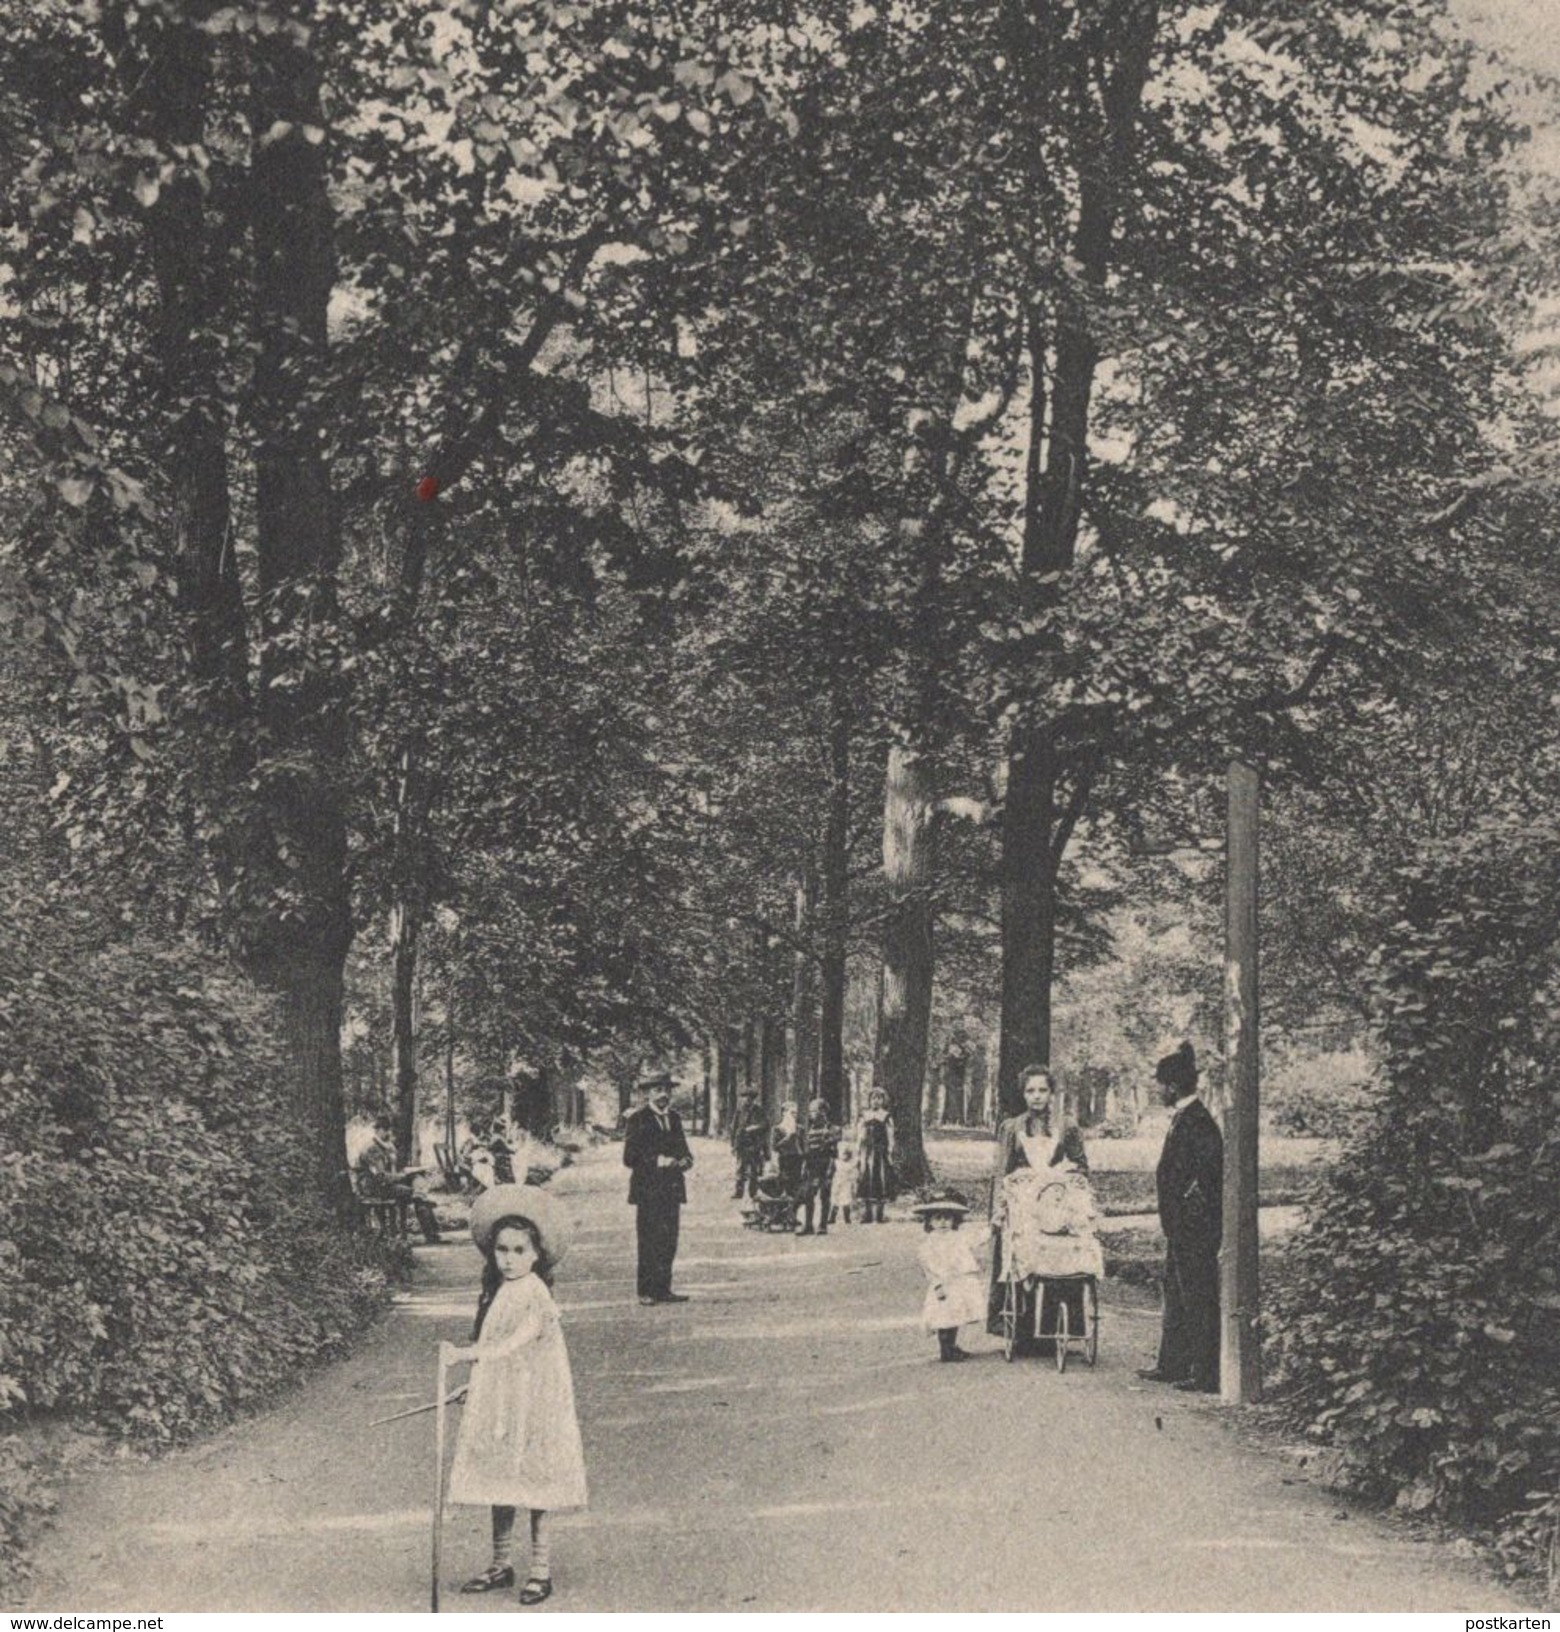 ALTE POSTKARTE LEOBEN STADTPARK 1903 MÄDCHEN SONNTAGSKLEID Kinderwagen Kind Cpa Ansichtskarte Postcard AK - Leoben